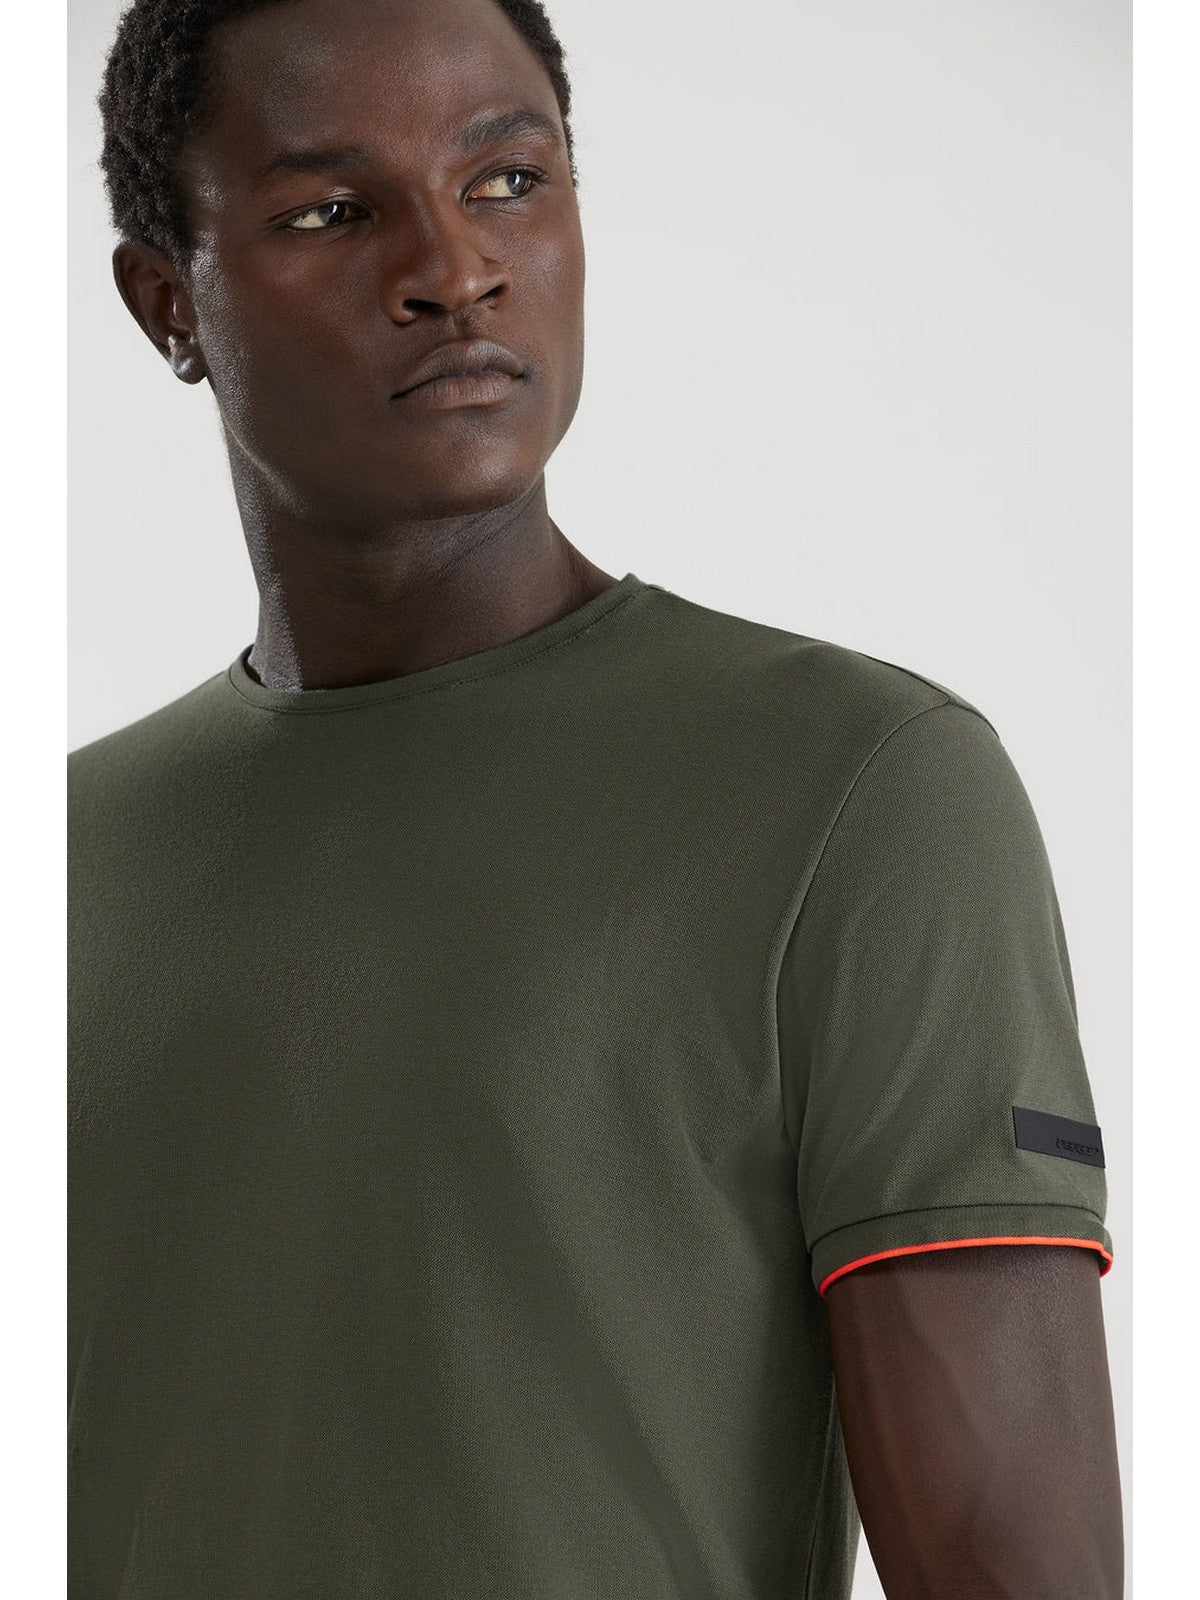 RRD T-Shirt e Polo Uomo  23138 21 Verde